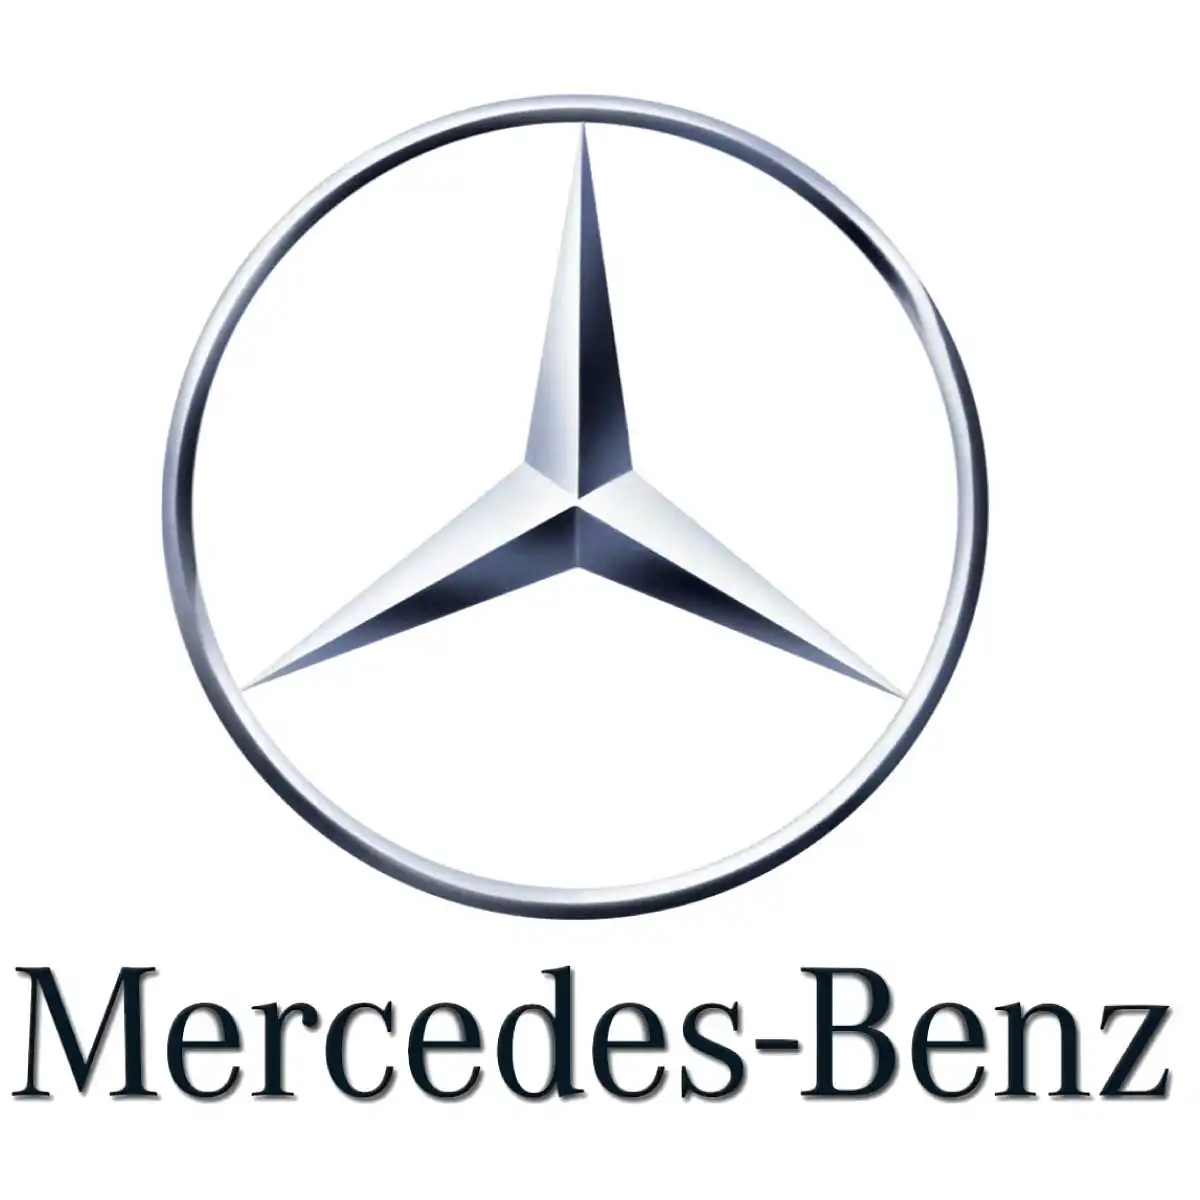 En İyi Otomobil Markaları Mercedes-Benz